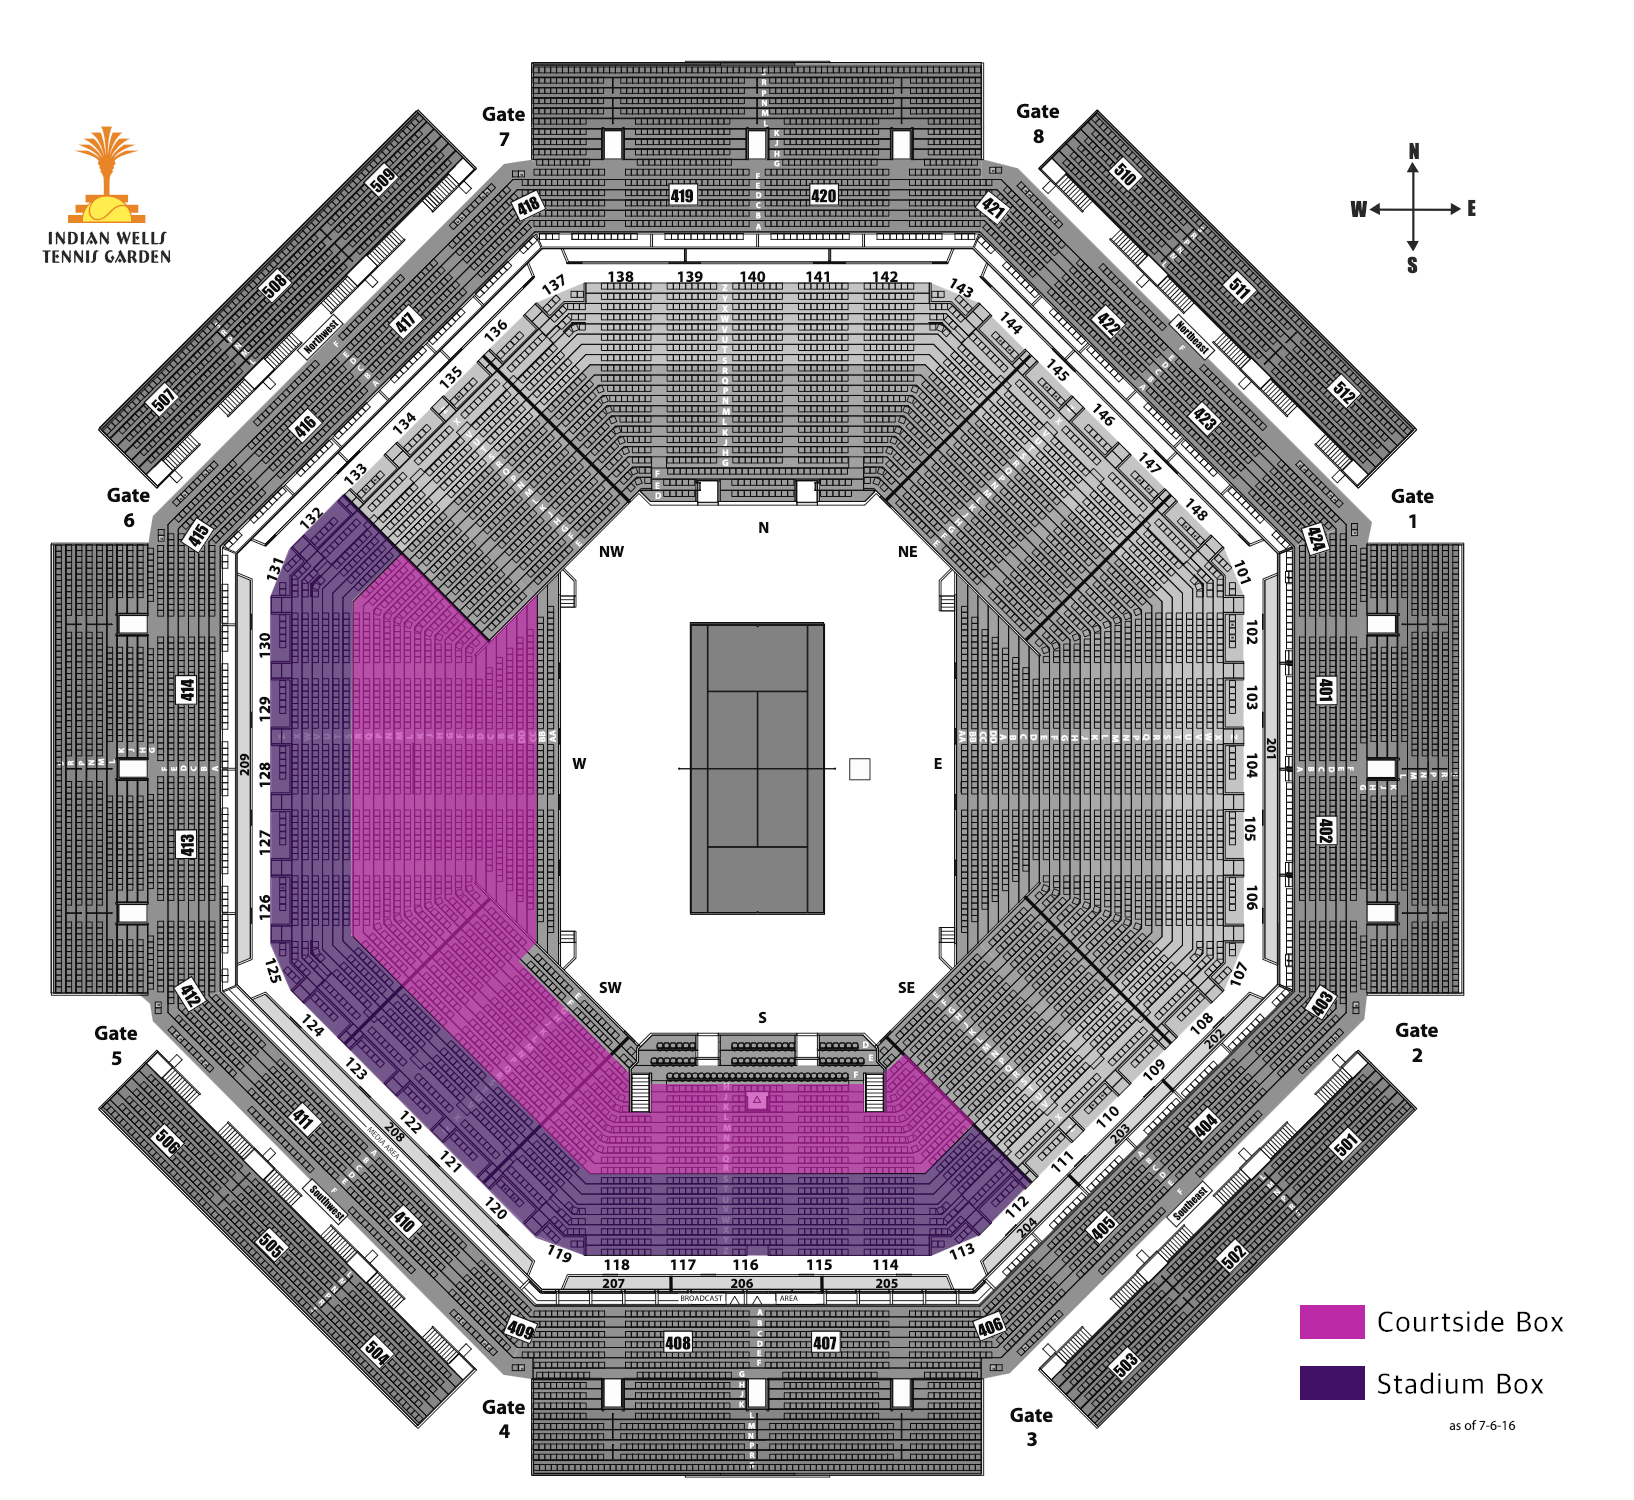 Stadium 1 Seating Map, Indeian Wells Tennis Garden